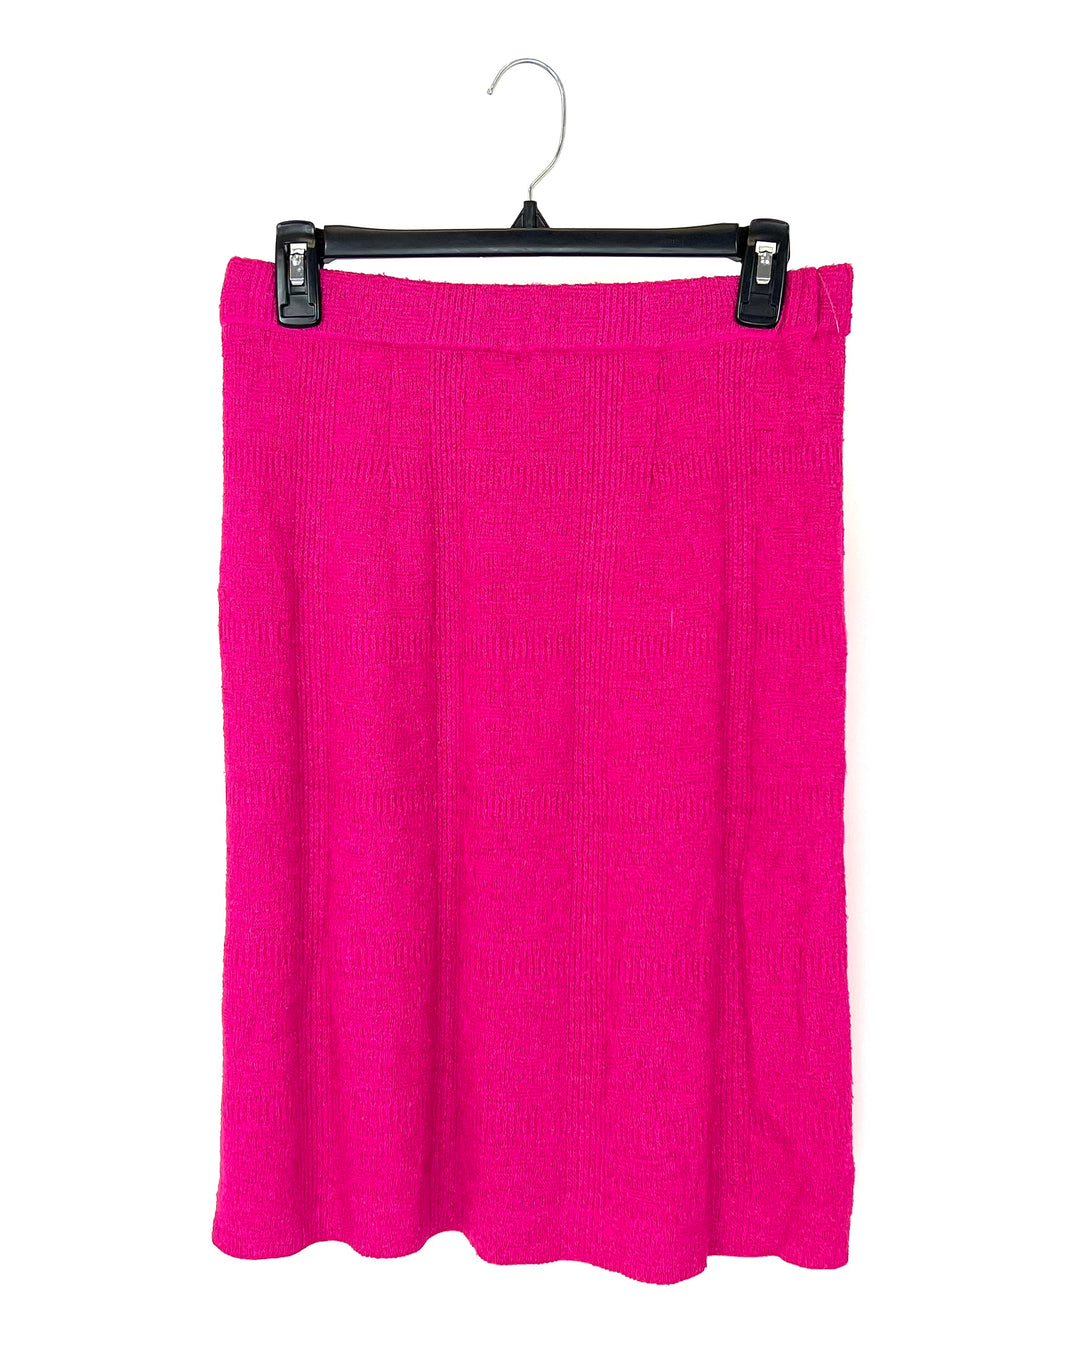 Pink Knit Skirt - Size 2-4